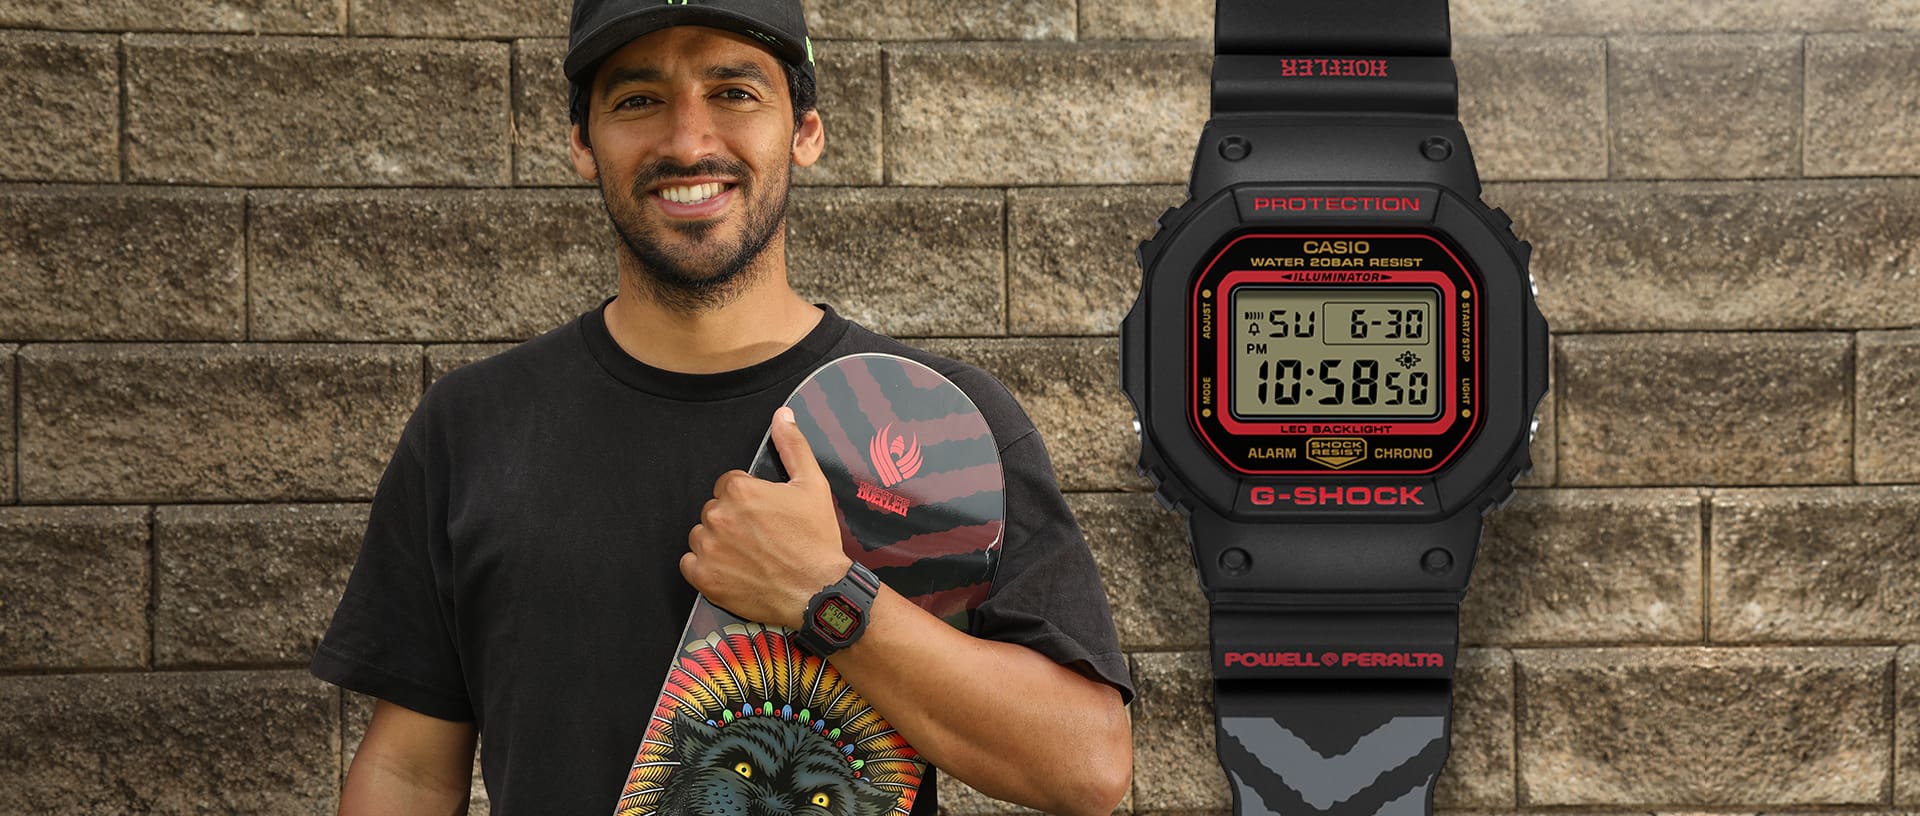 Kelvin Hoefler with the G-SHOCK DW5600KH-1 Digital watch and Powell Peralta Skateboard Deck